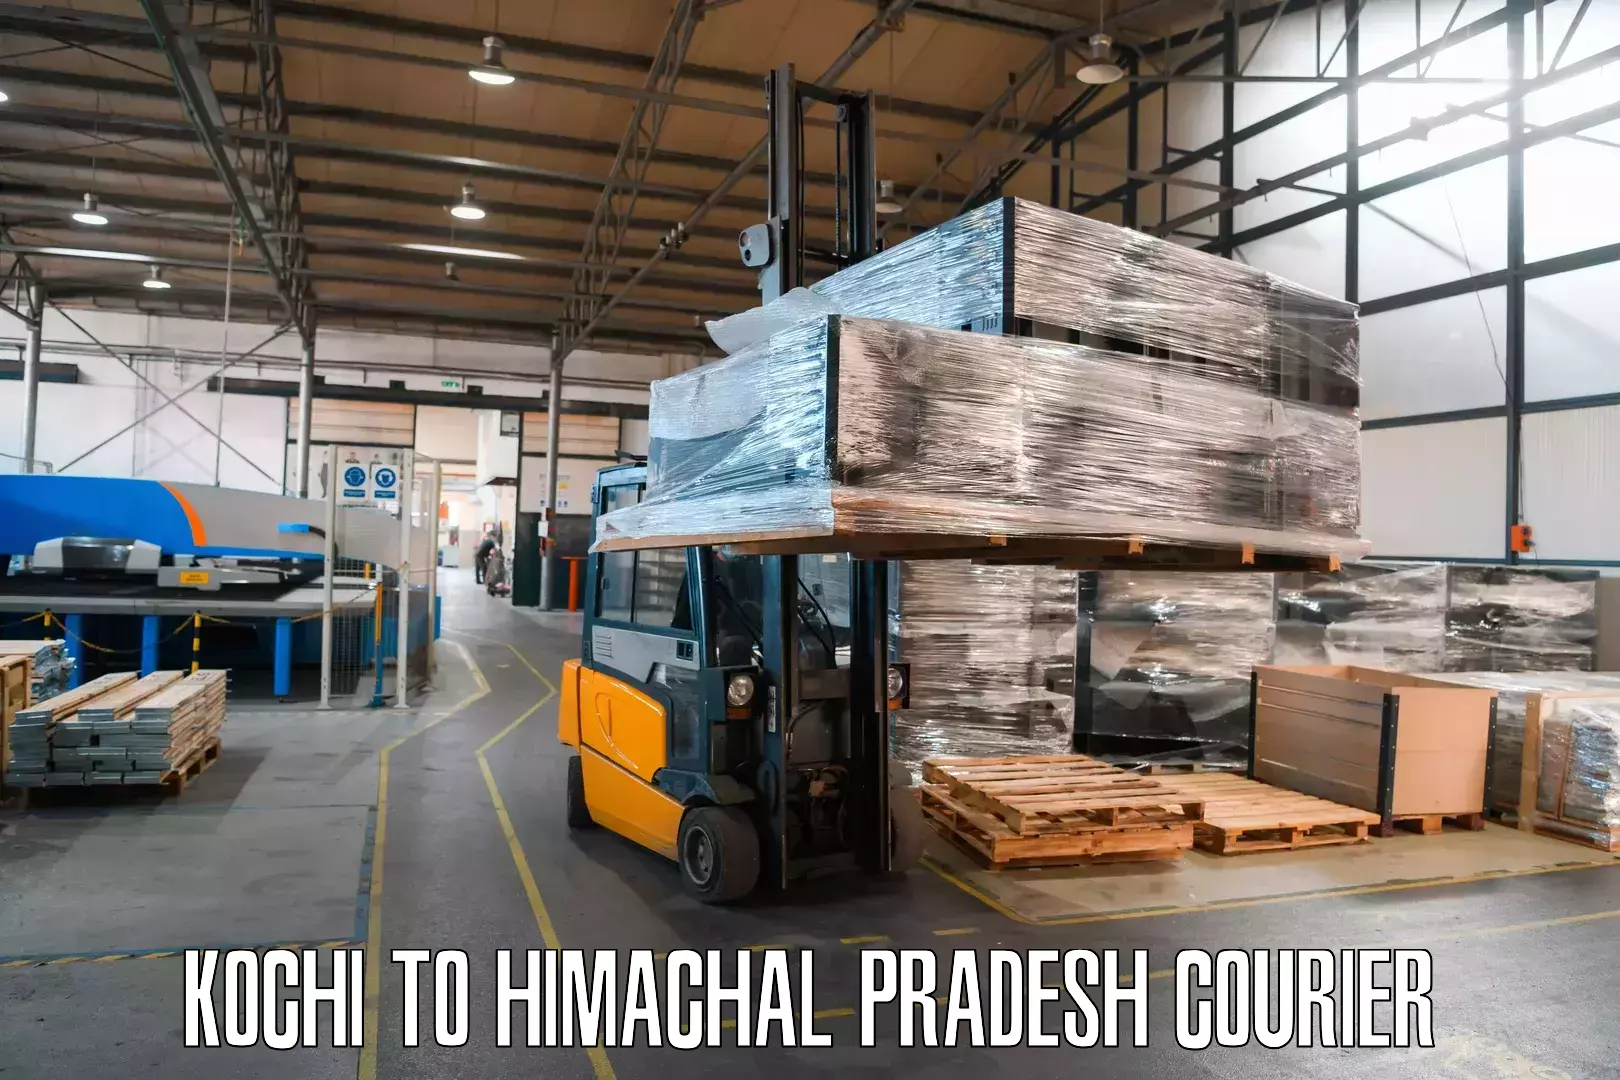 Courier service comparison in Kochi to Himachal Pradesh